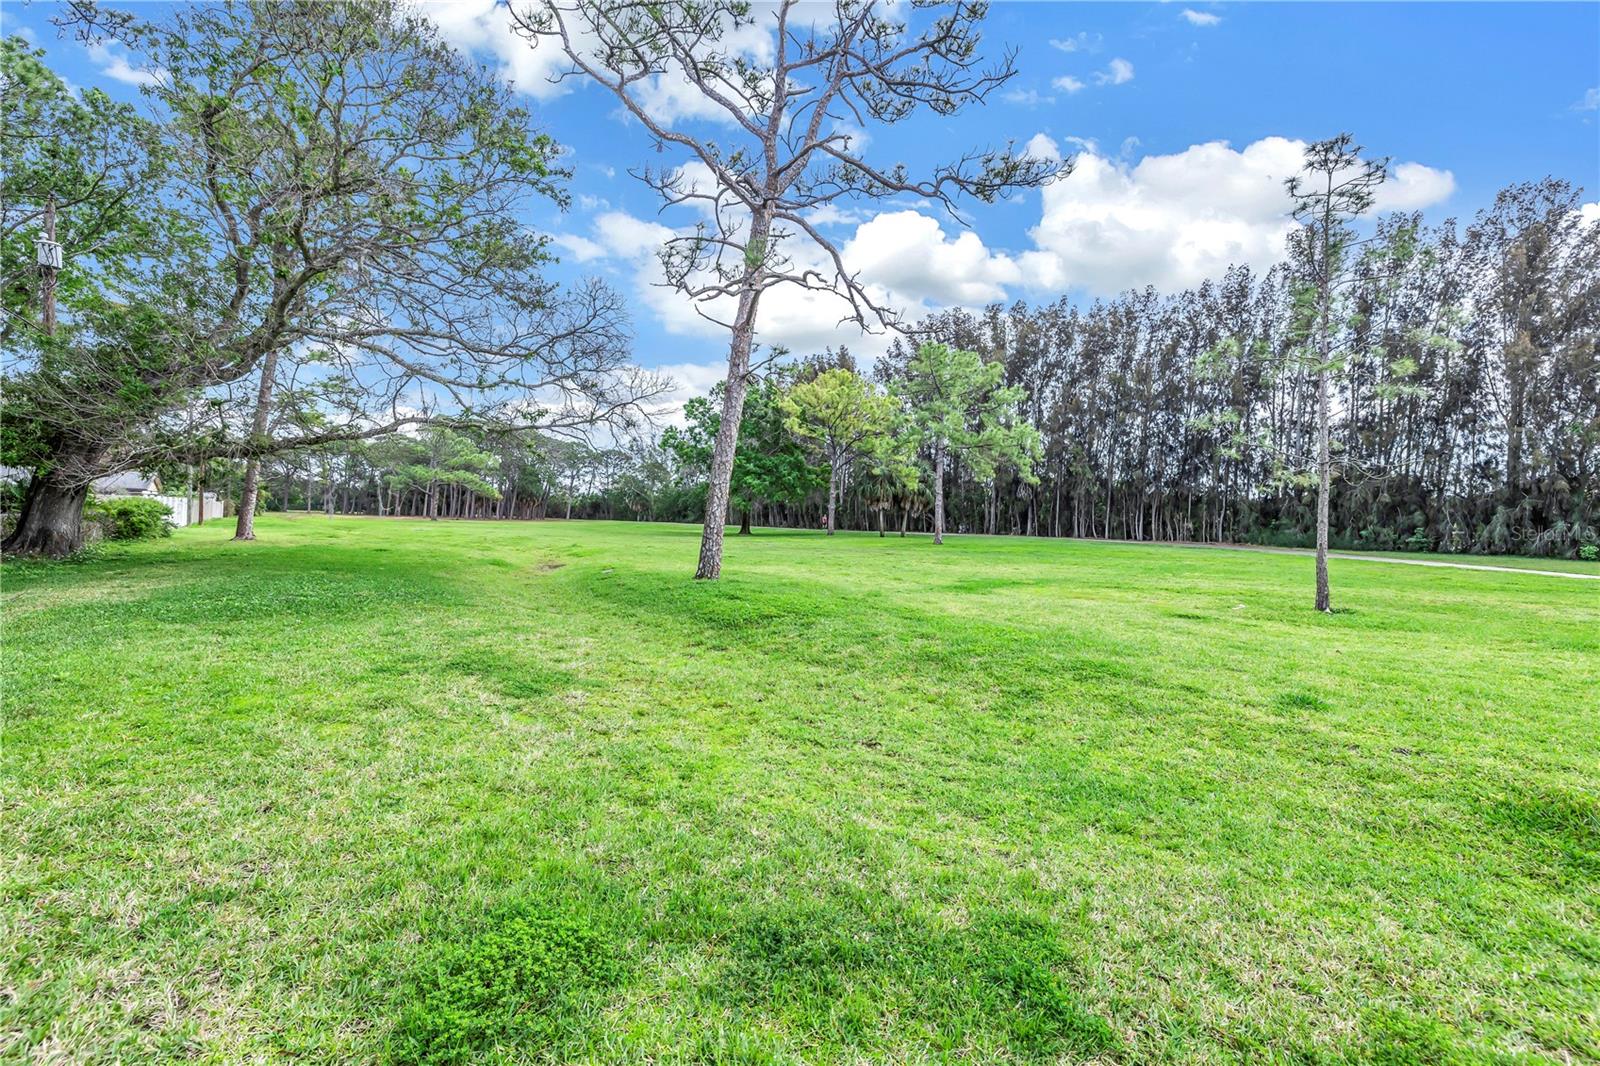 Beautiful green acreage off your backyard